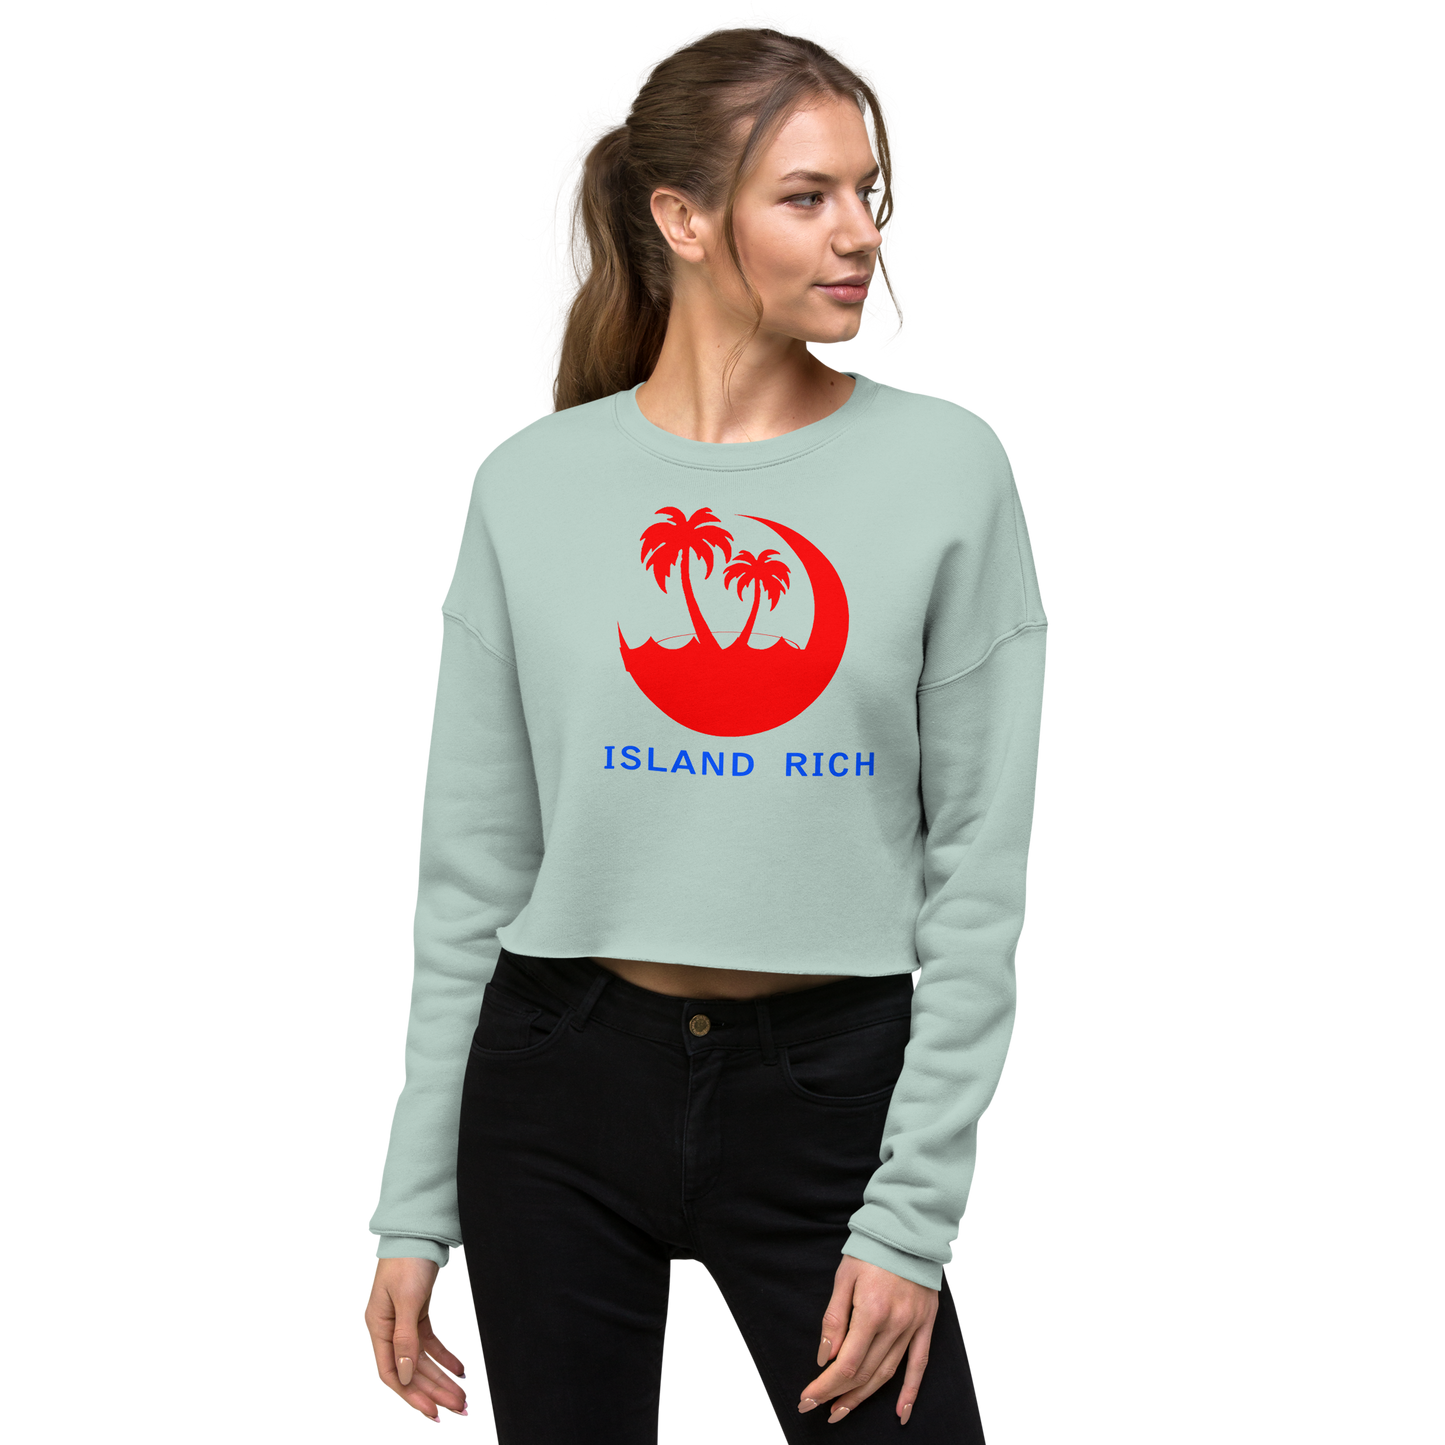 Island rich Crop Sweatshirt